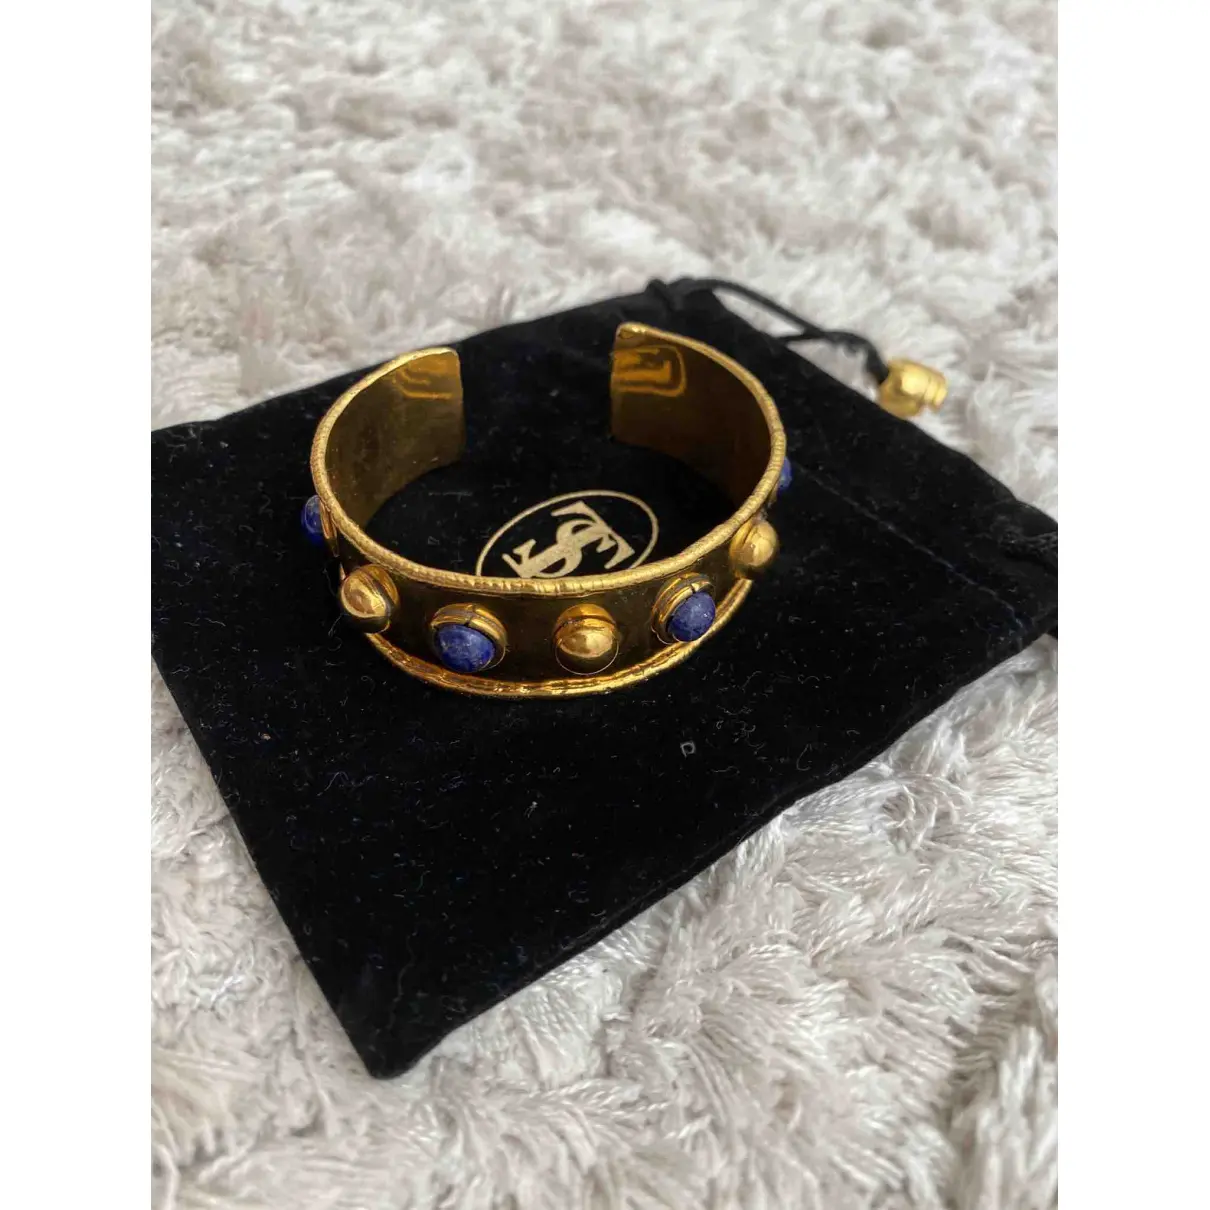 Buy Sylvia Toledano Gold Gold plated Bracelet online